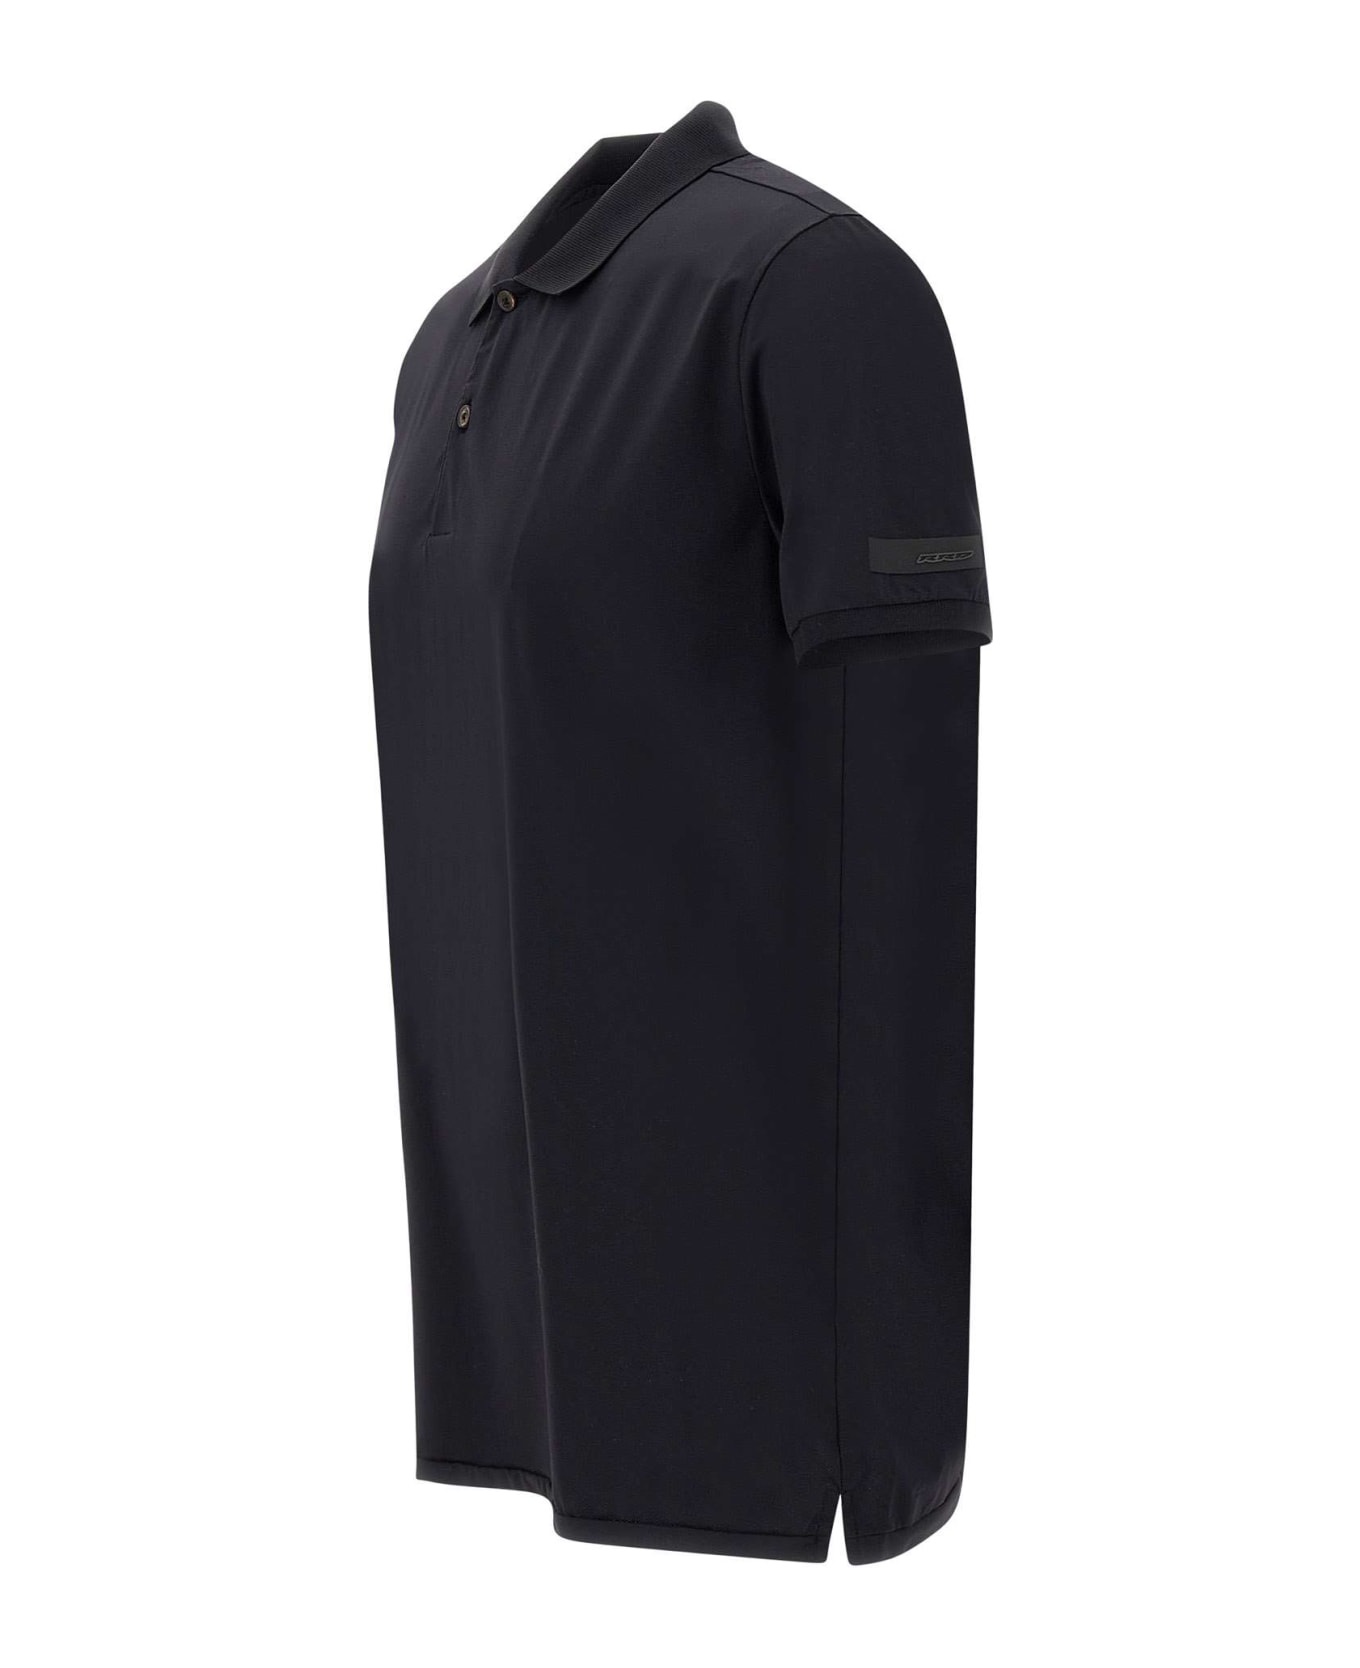 RRD - Roberto Ricci Design "gdy" Oxford Polo Shirt - BLACK